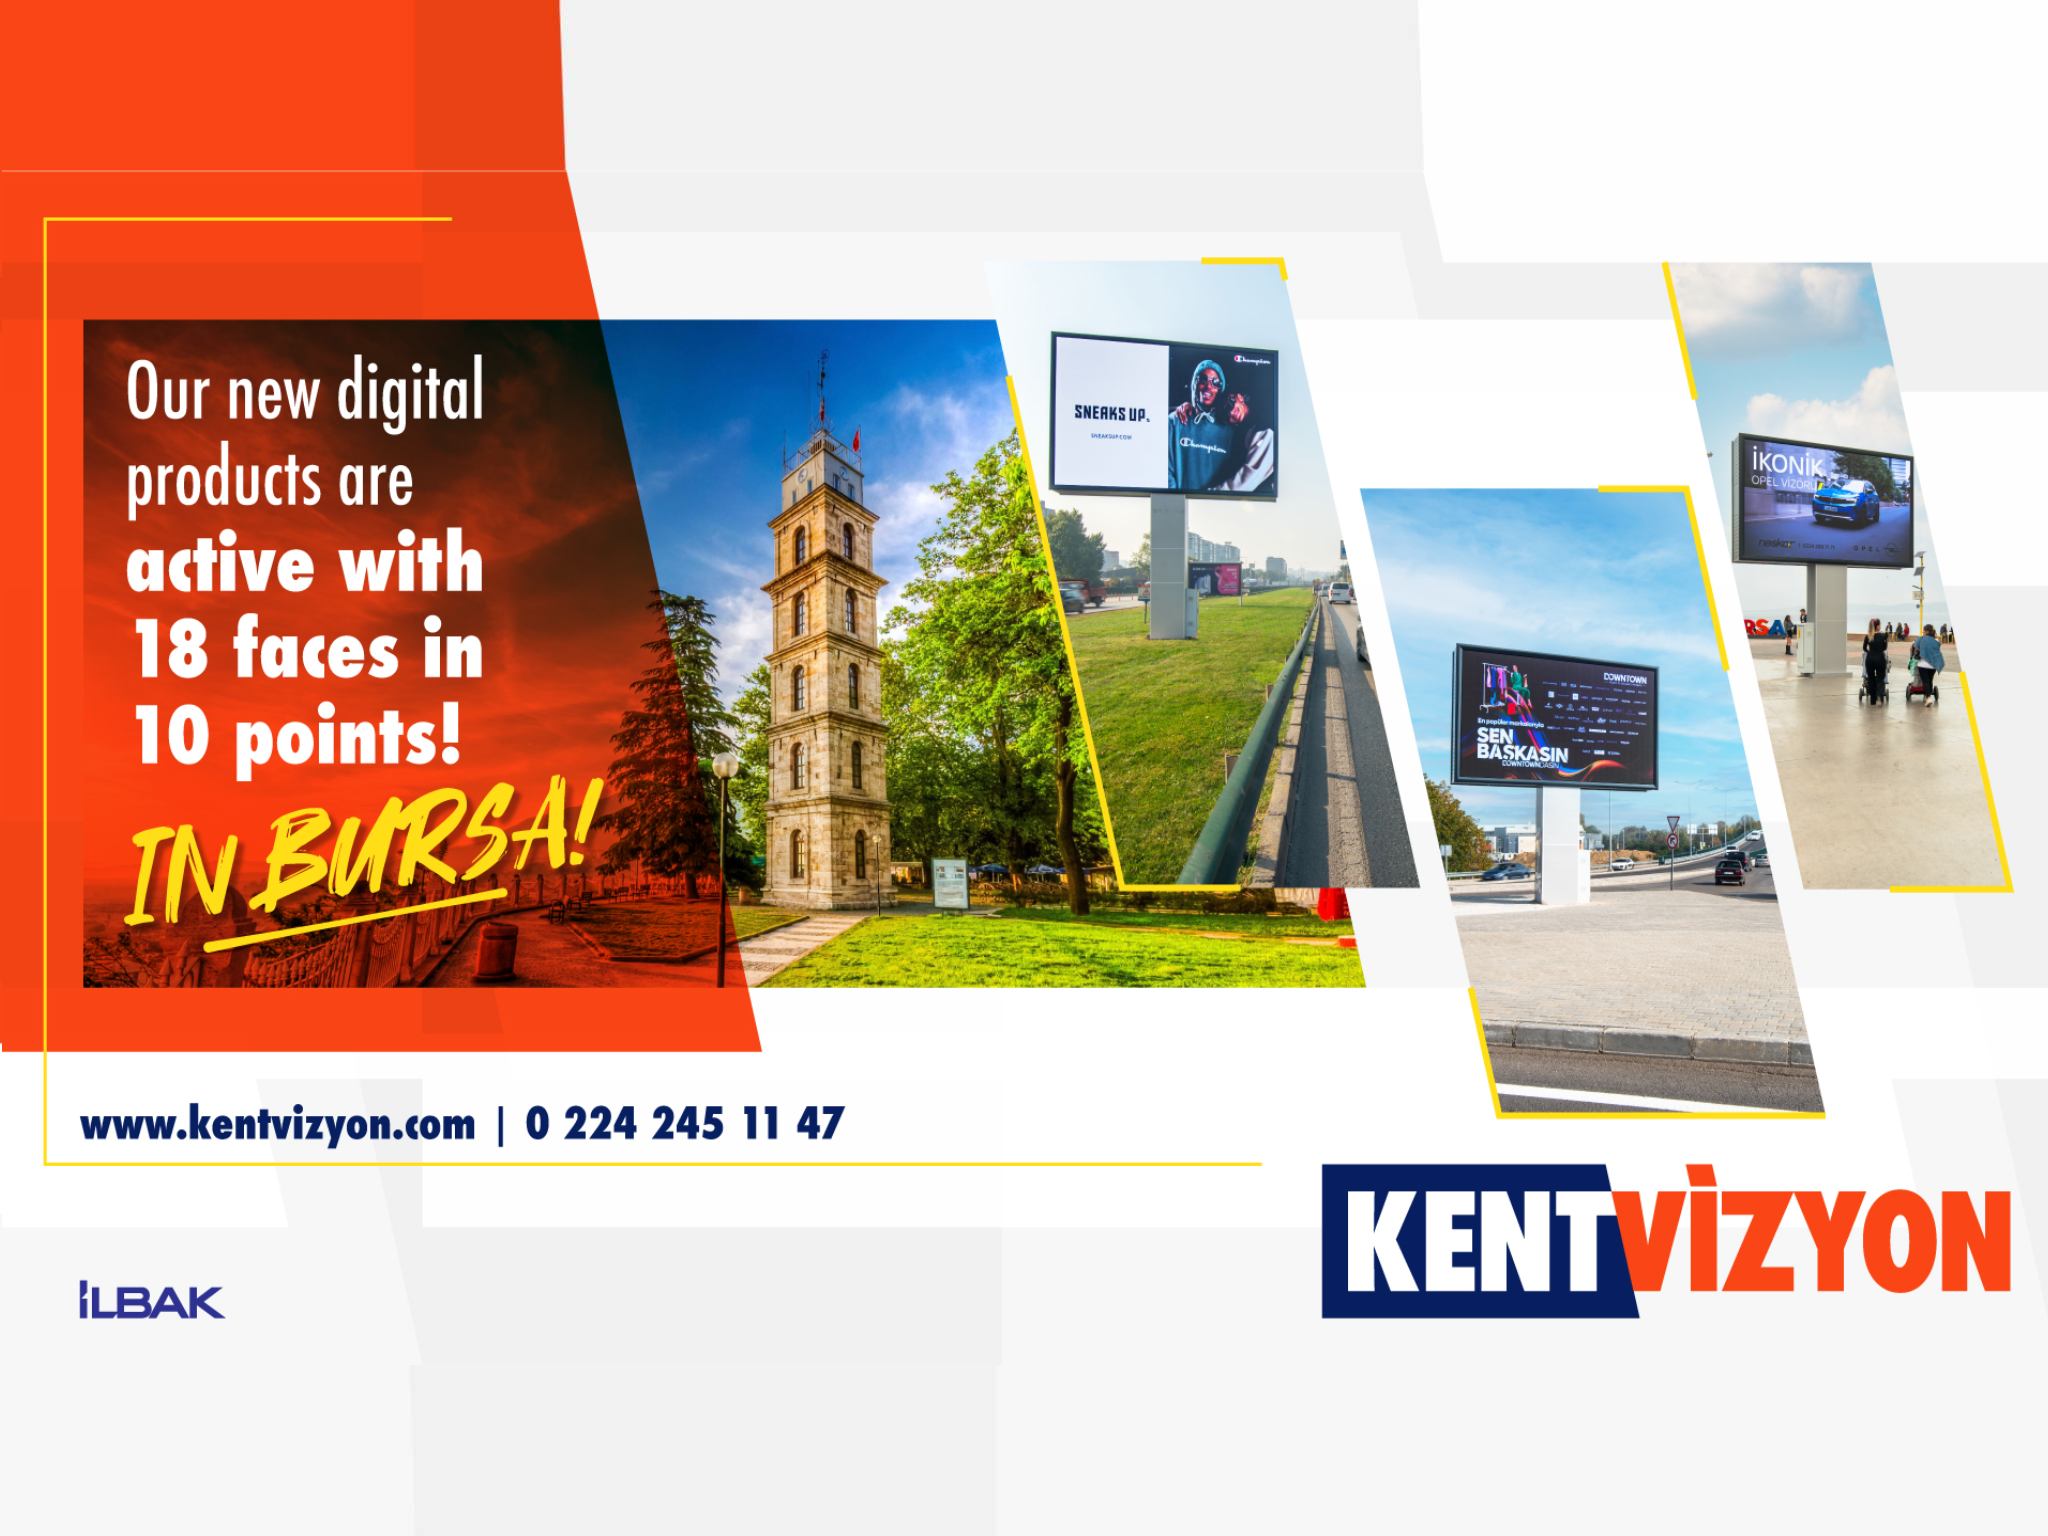 Kentvizyon Actualized Digital Products in Bursa!